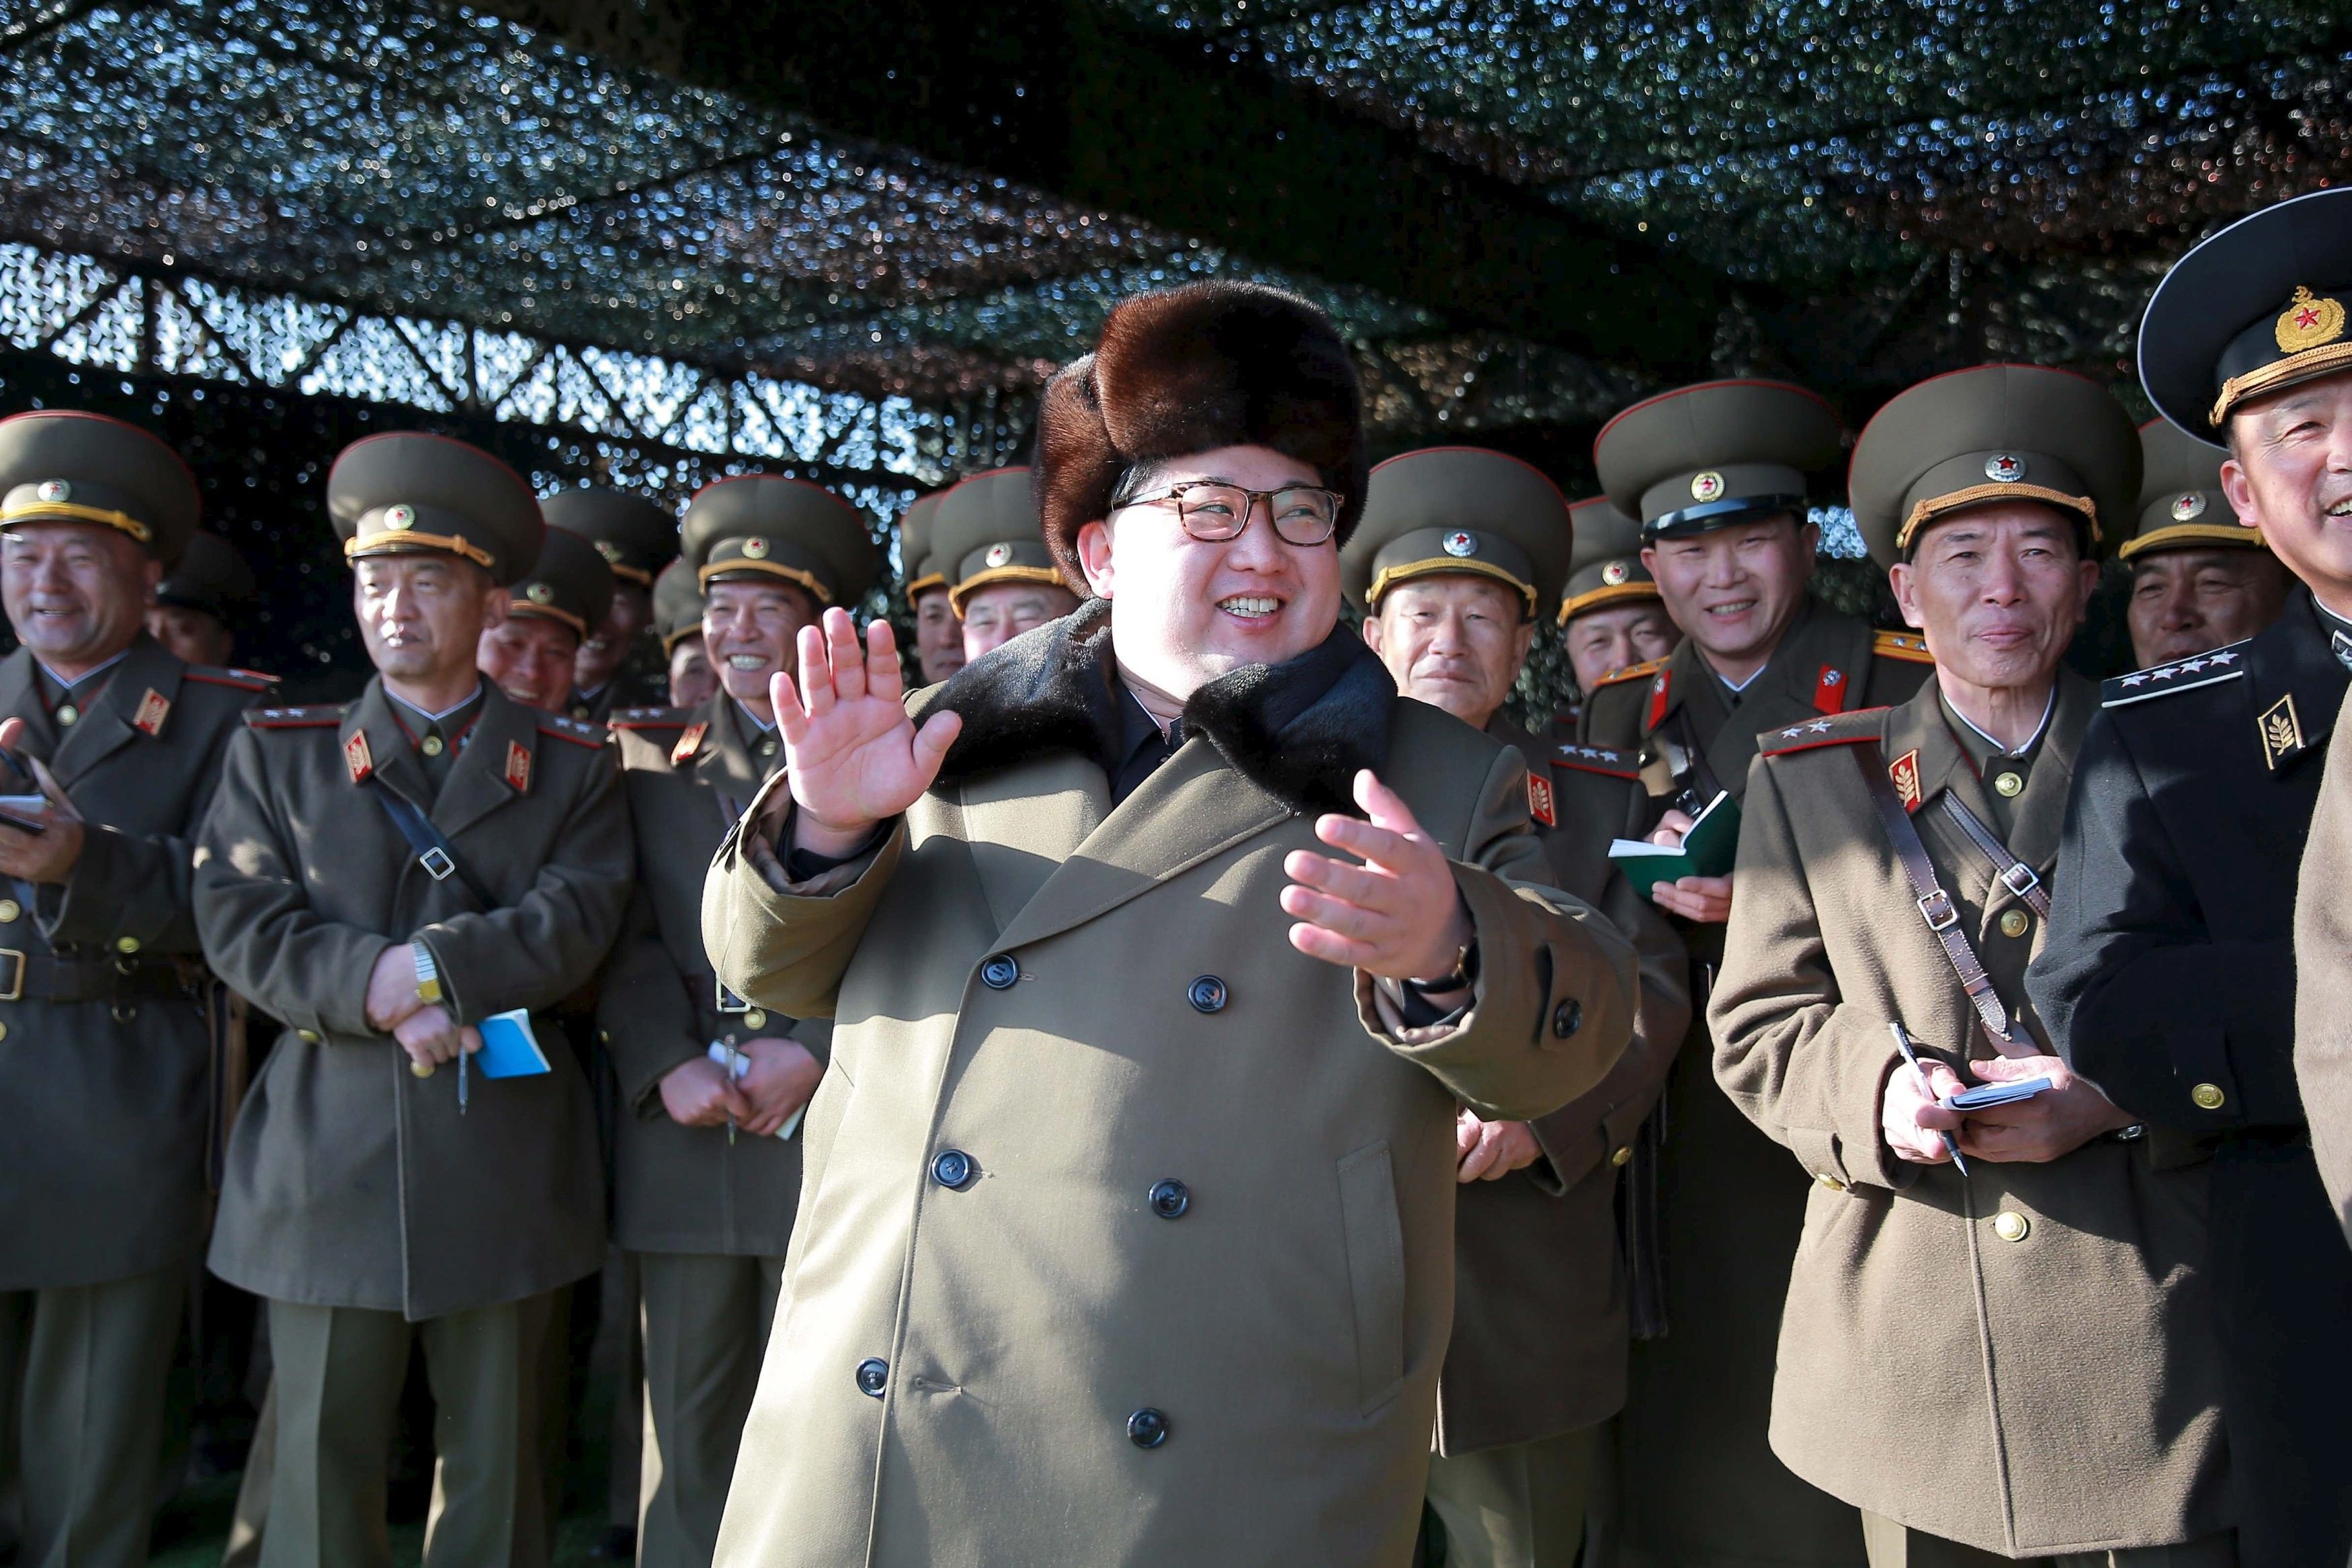 Факты о северной корее. Ким Чен Ир на Пэктусан. Северная Корея диктатура. Склон горы Пэктусан рождение Ким Чен Ира. Ким Чен Ын в ушанке.